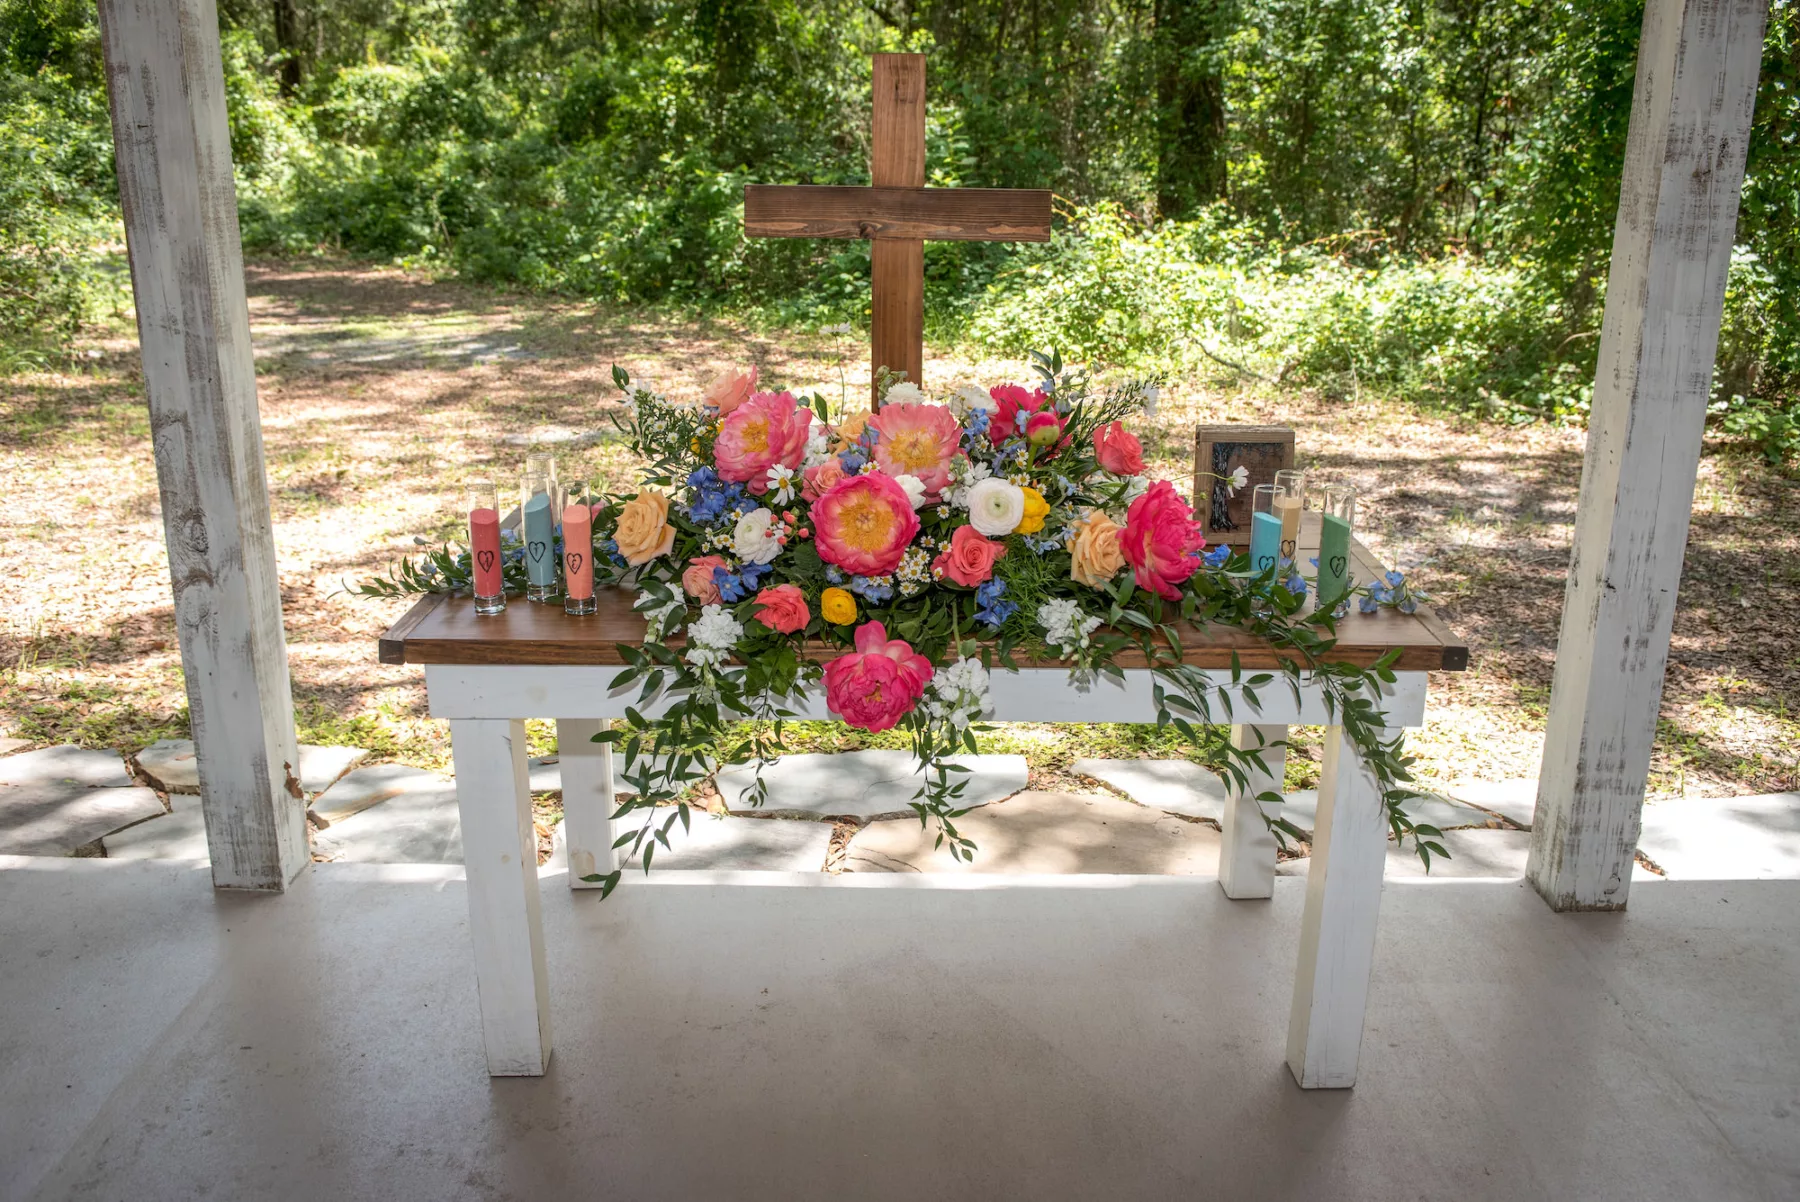 Rustic Pink Peony, White Ranunculus, Orange Roses, Blue Flower, and Greenery Wedding Ceremony Floral Arrangement Decor Ideas | Sand Ceremony Inspiration